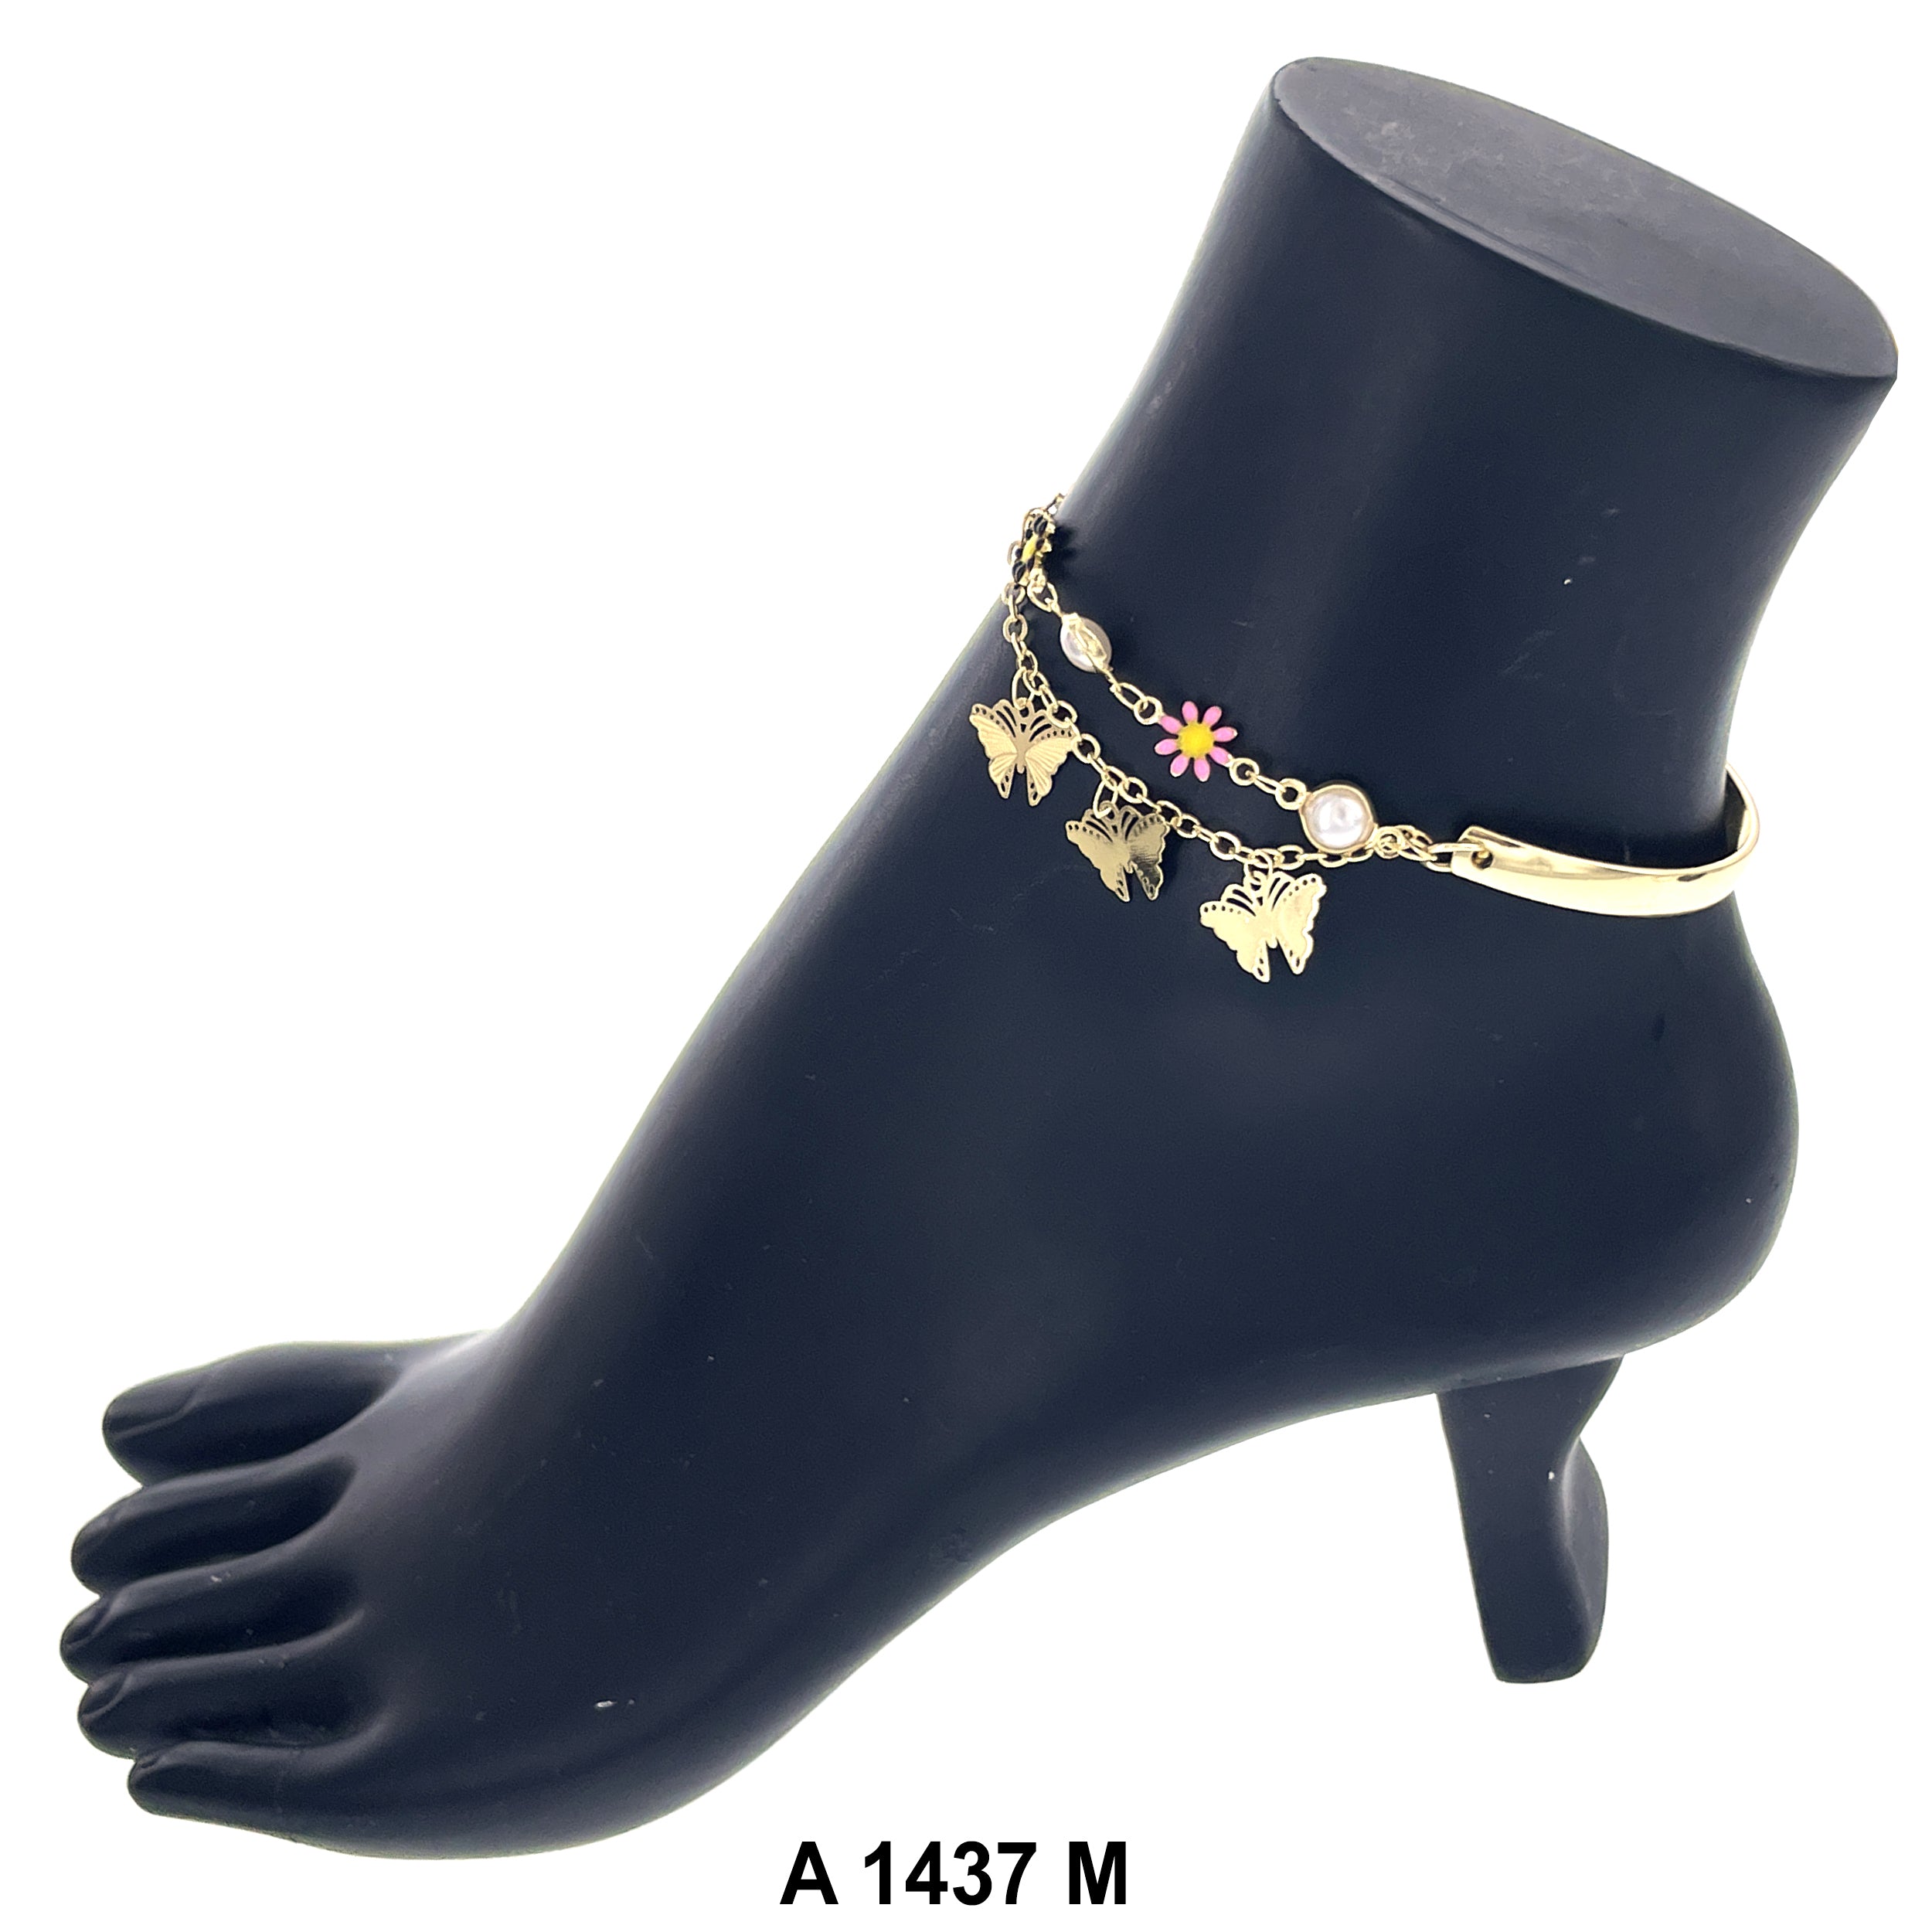 Fashion Anklets A 1437 M